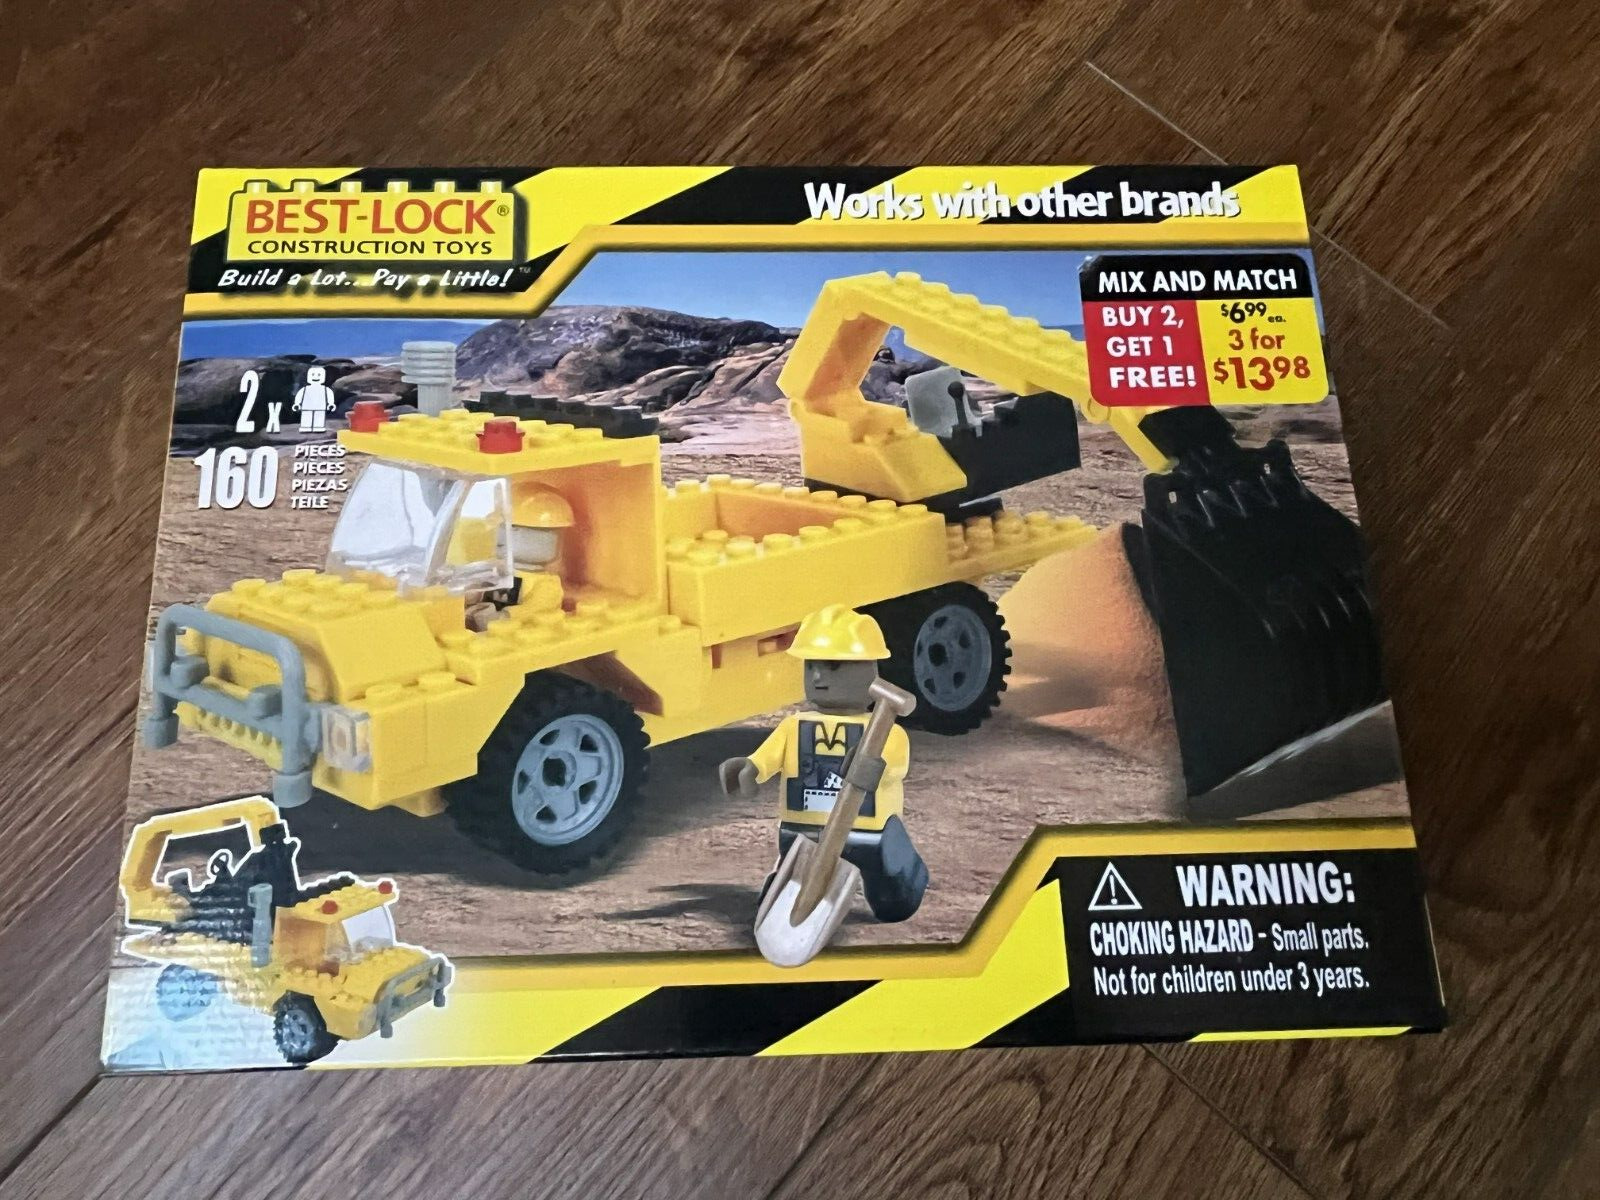 Best Lock Construction toys excavator backhoe new